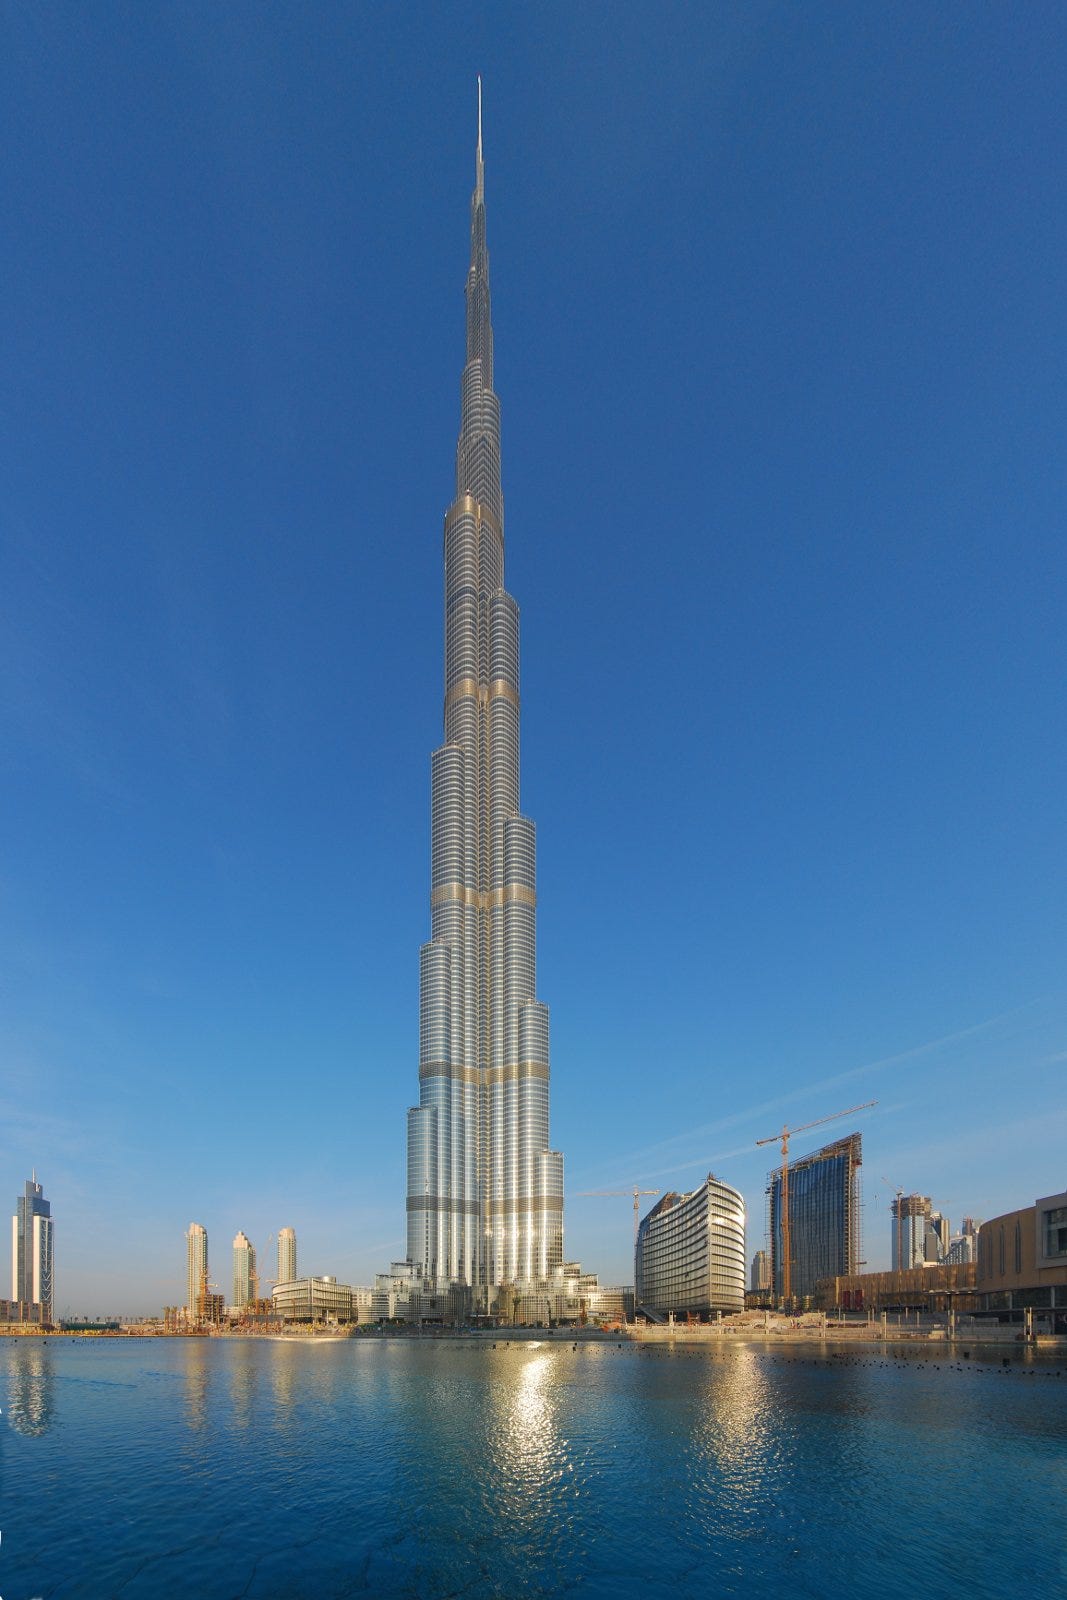 File:Burj Khalifa building.jpg - Wikipedia